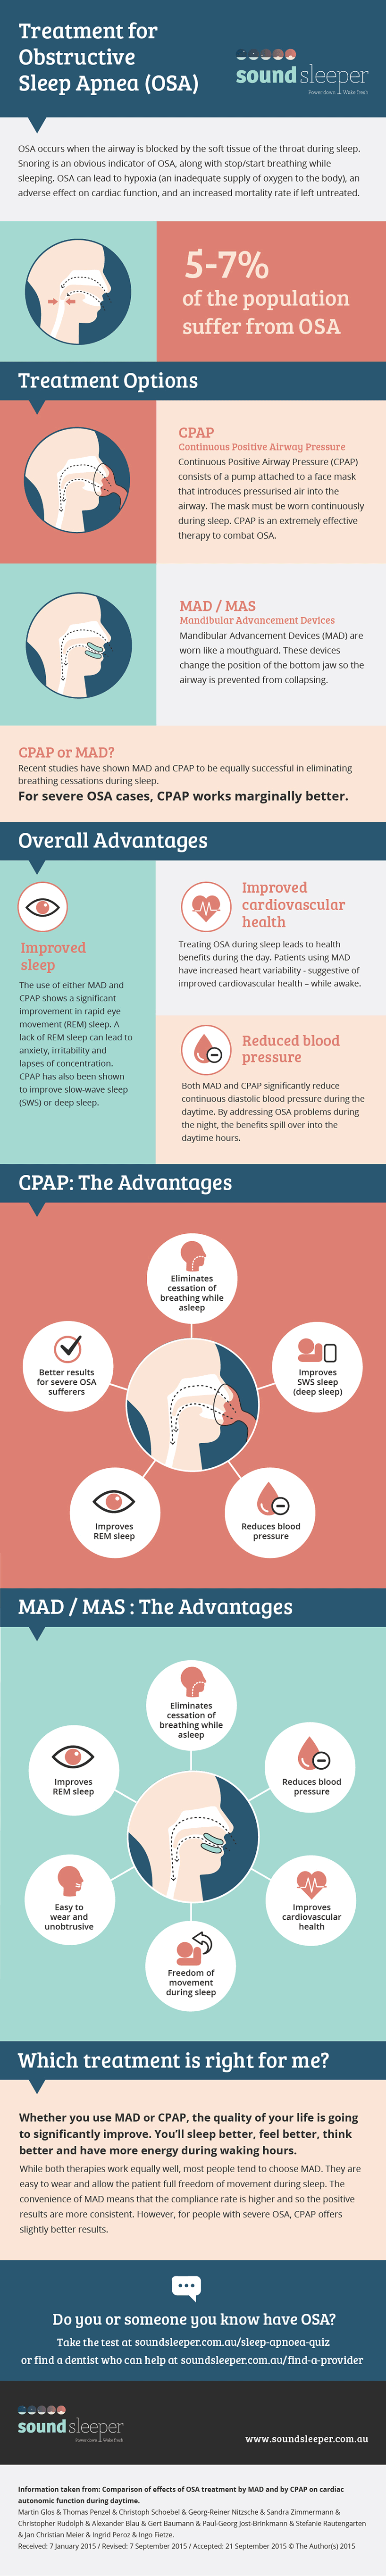 Obstructive Sleep Apnoea Treatment: CPAP vs Dental Appliances